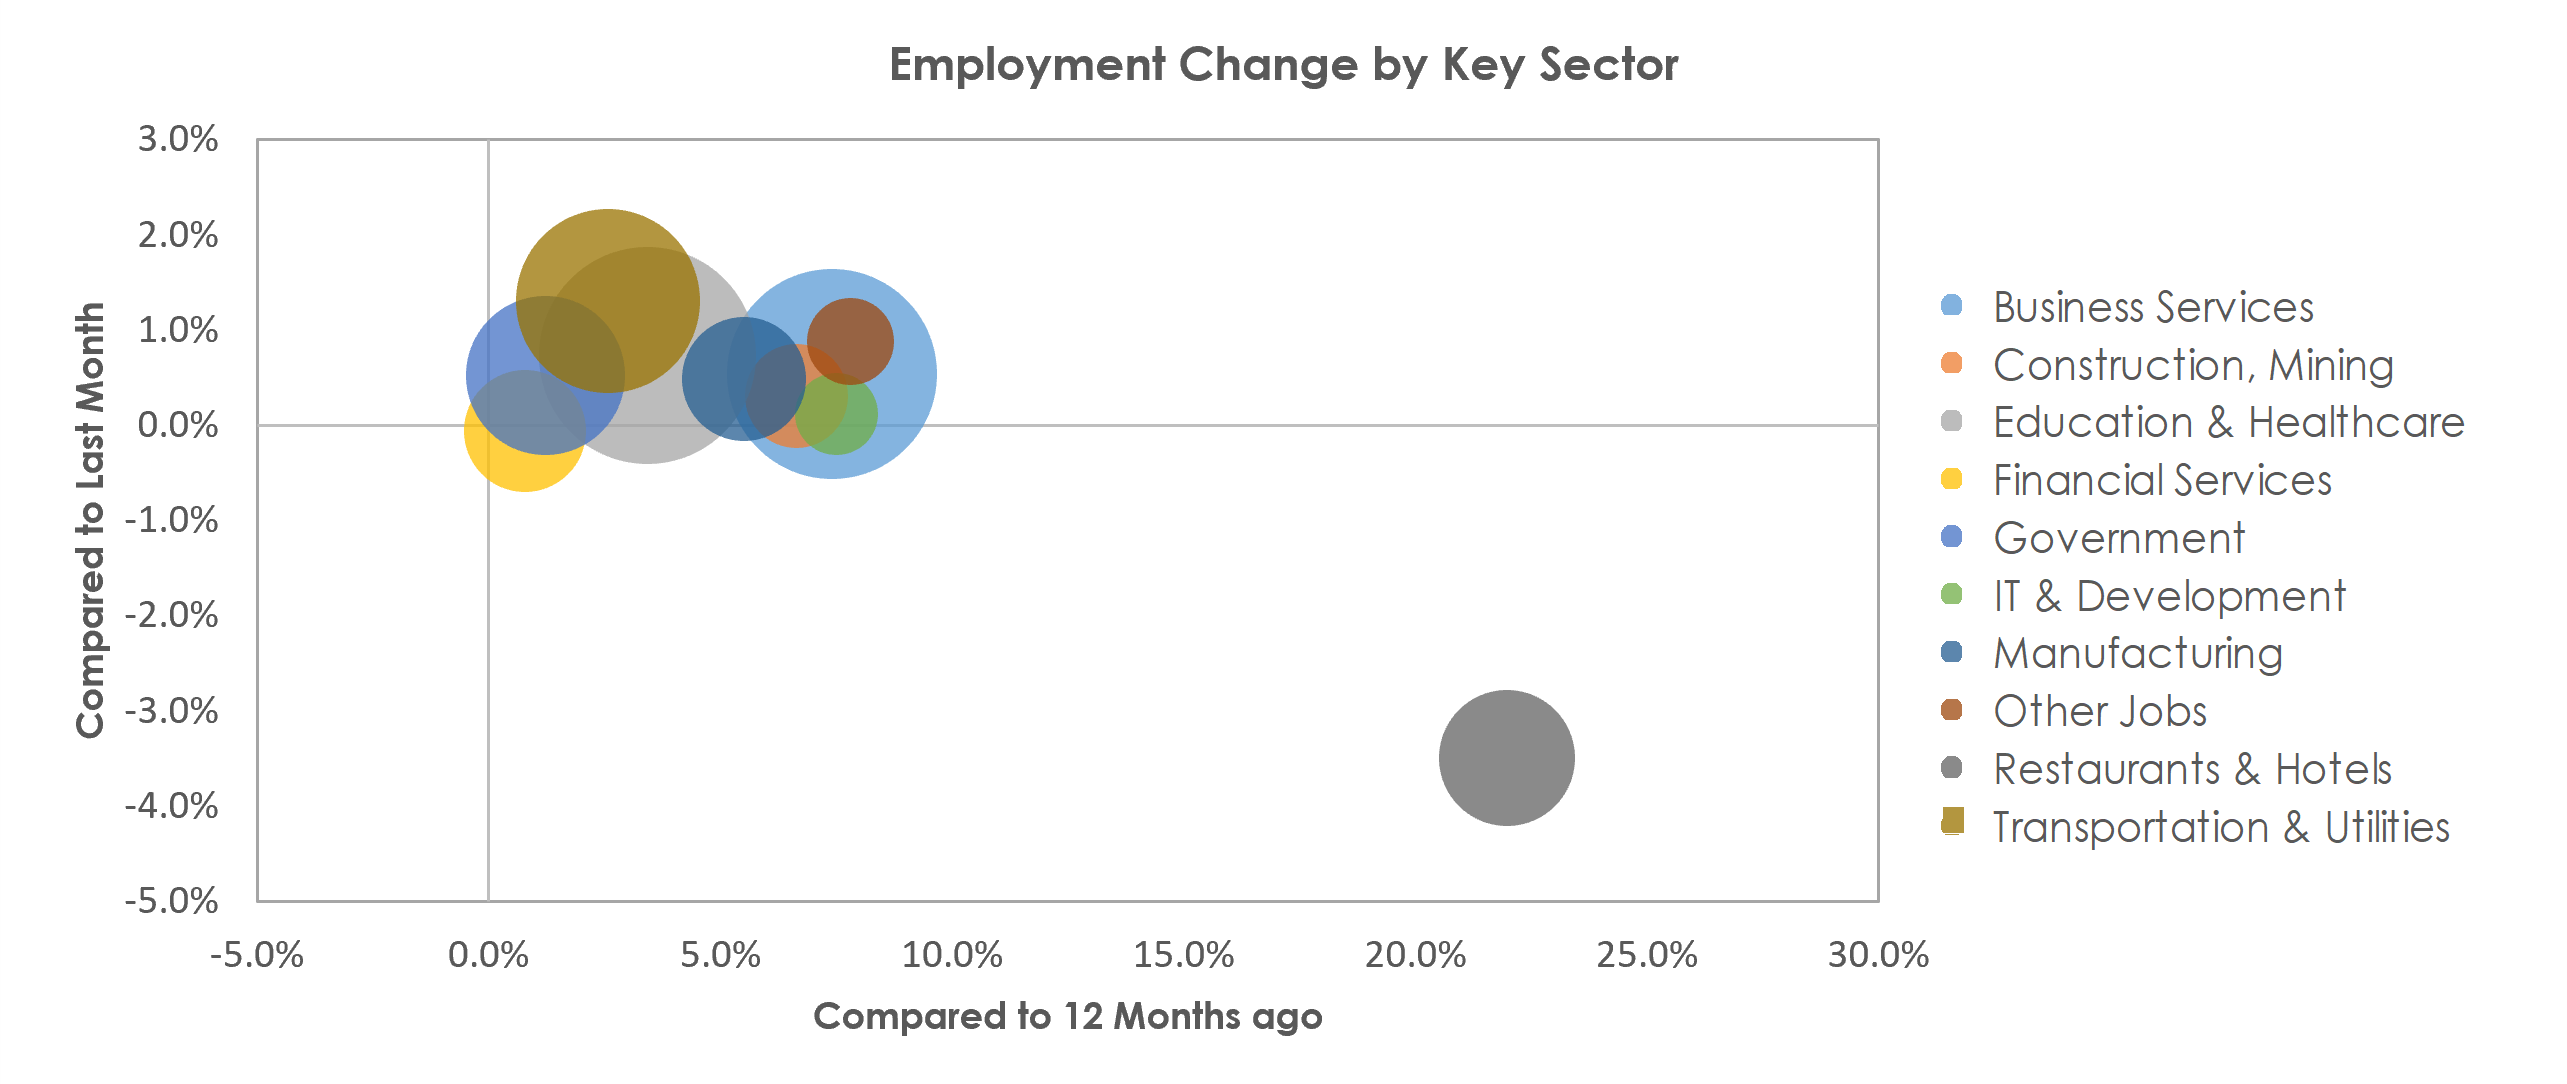 Boston-Cambridge-Nashua, MA-NH Unemployment by Industry November 2021